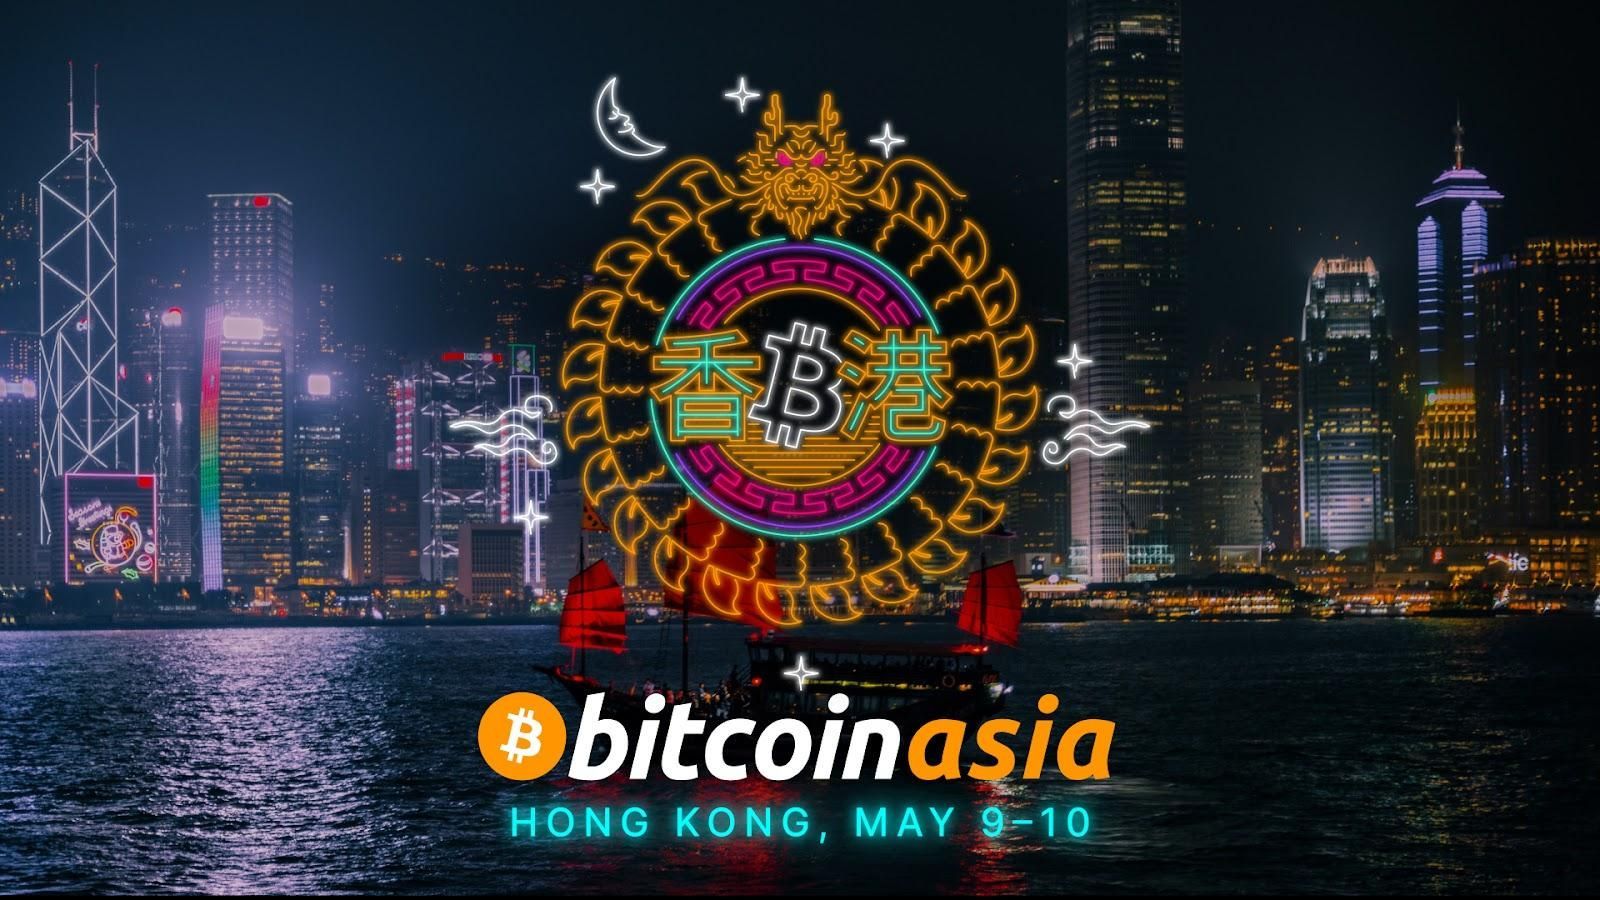 2024 Bitcoin Asia香港大会及周边活动全攻略